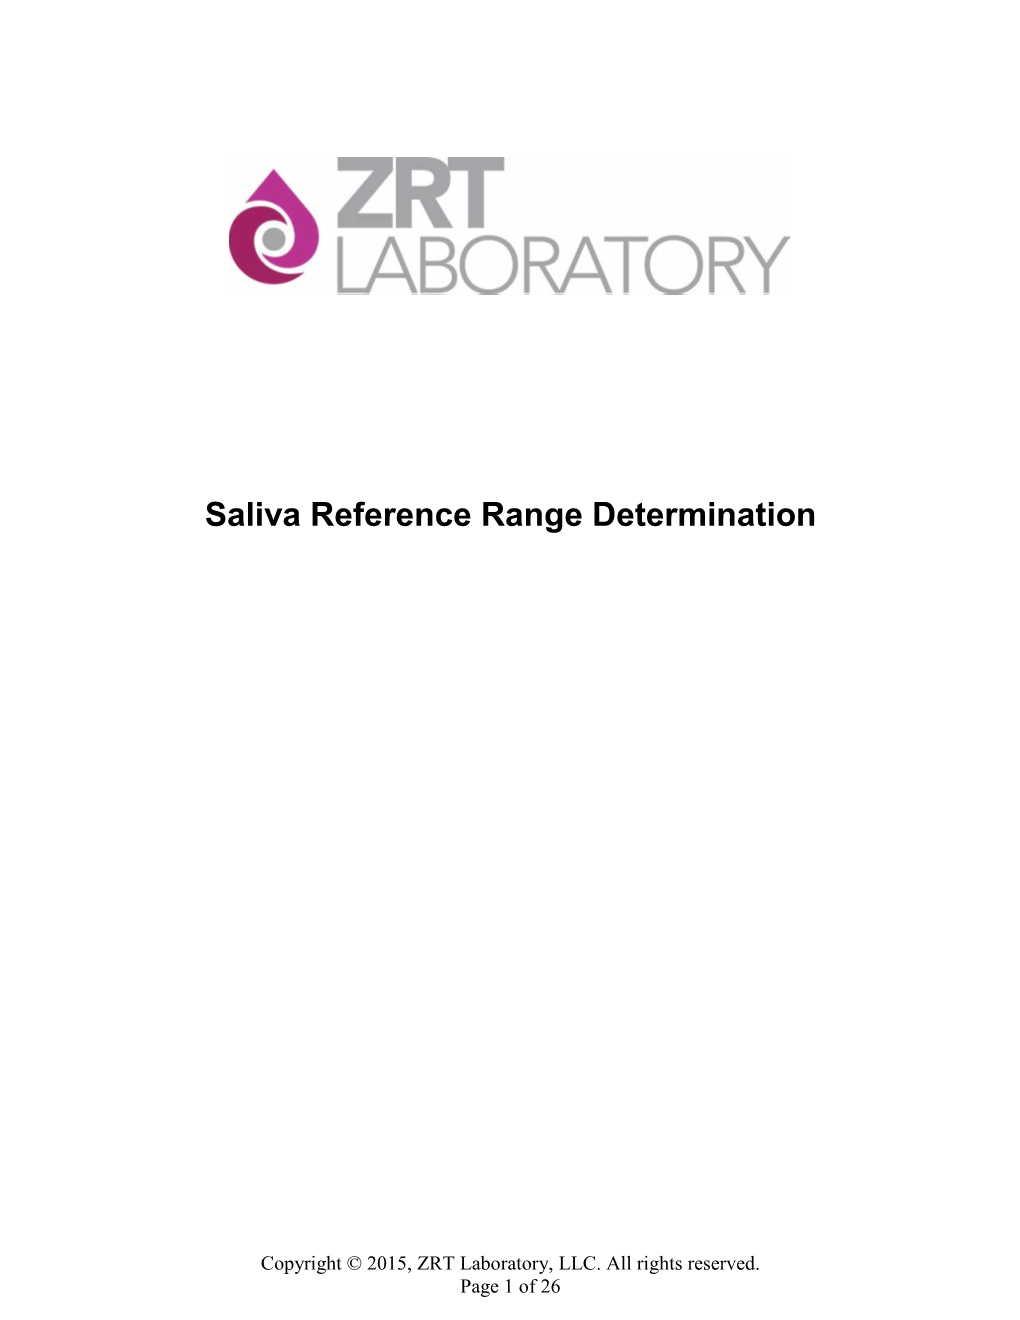 ZRT Reference Range Determination